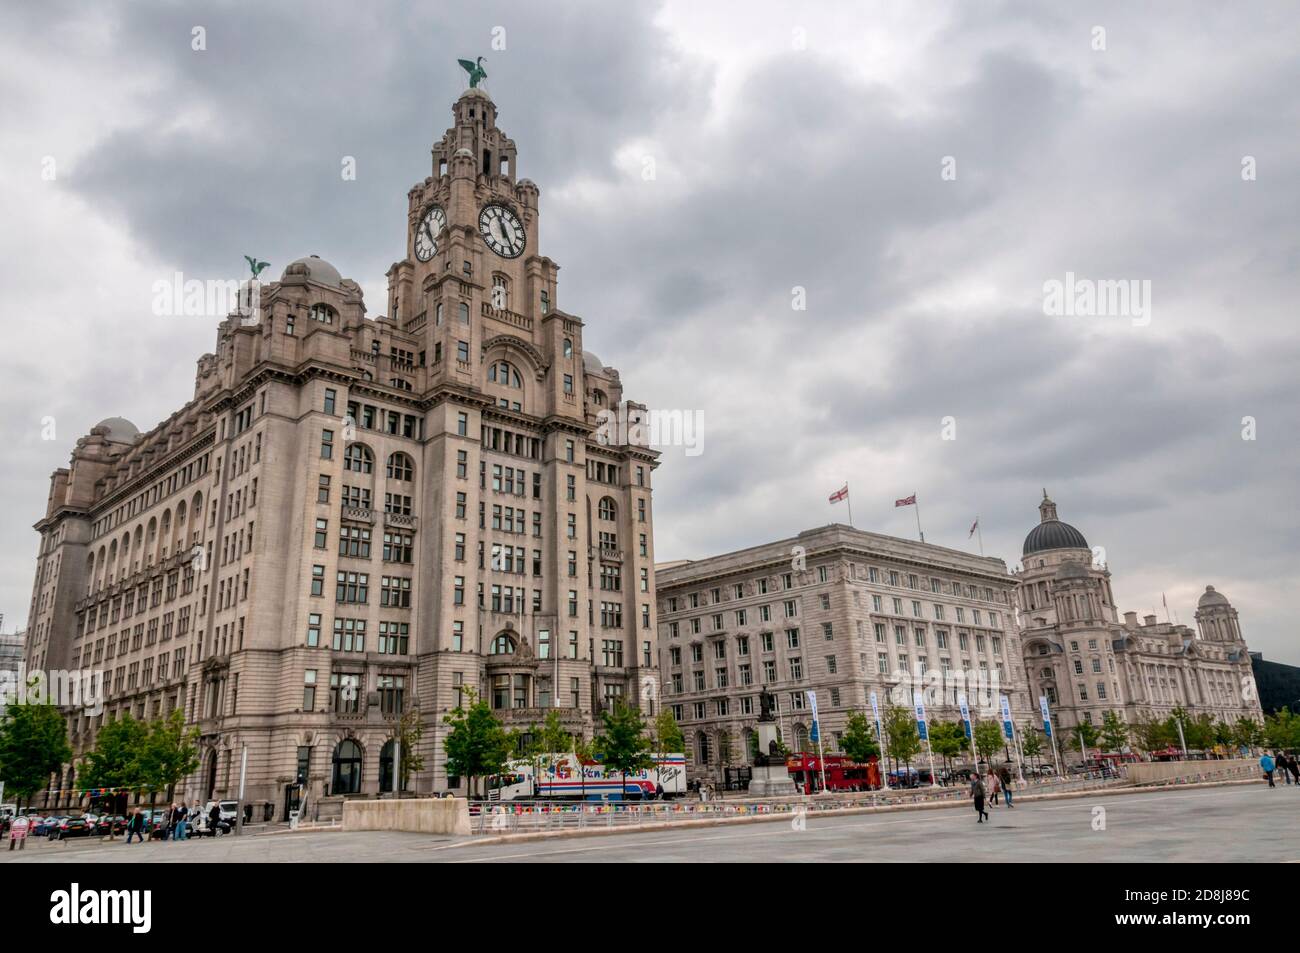 Die drei Grazien bei Liverpool Pierhead. Royal Liver Building, Cunard Building und Port of Liverpool Building. Stockfoto